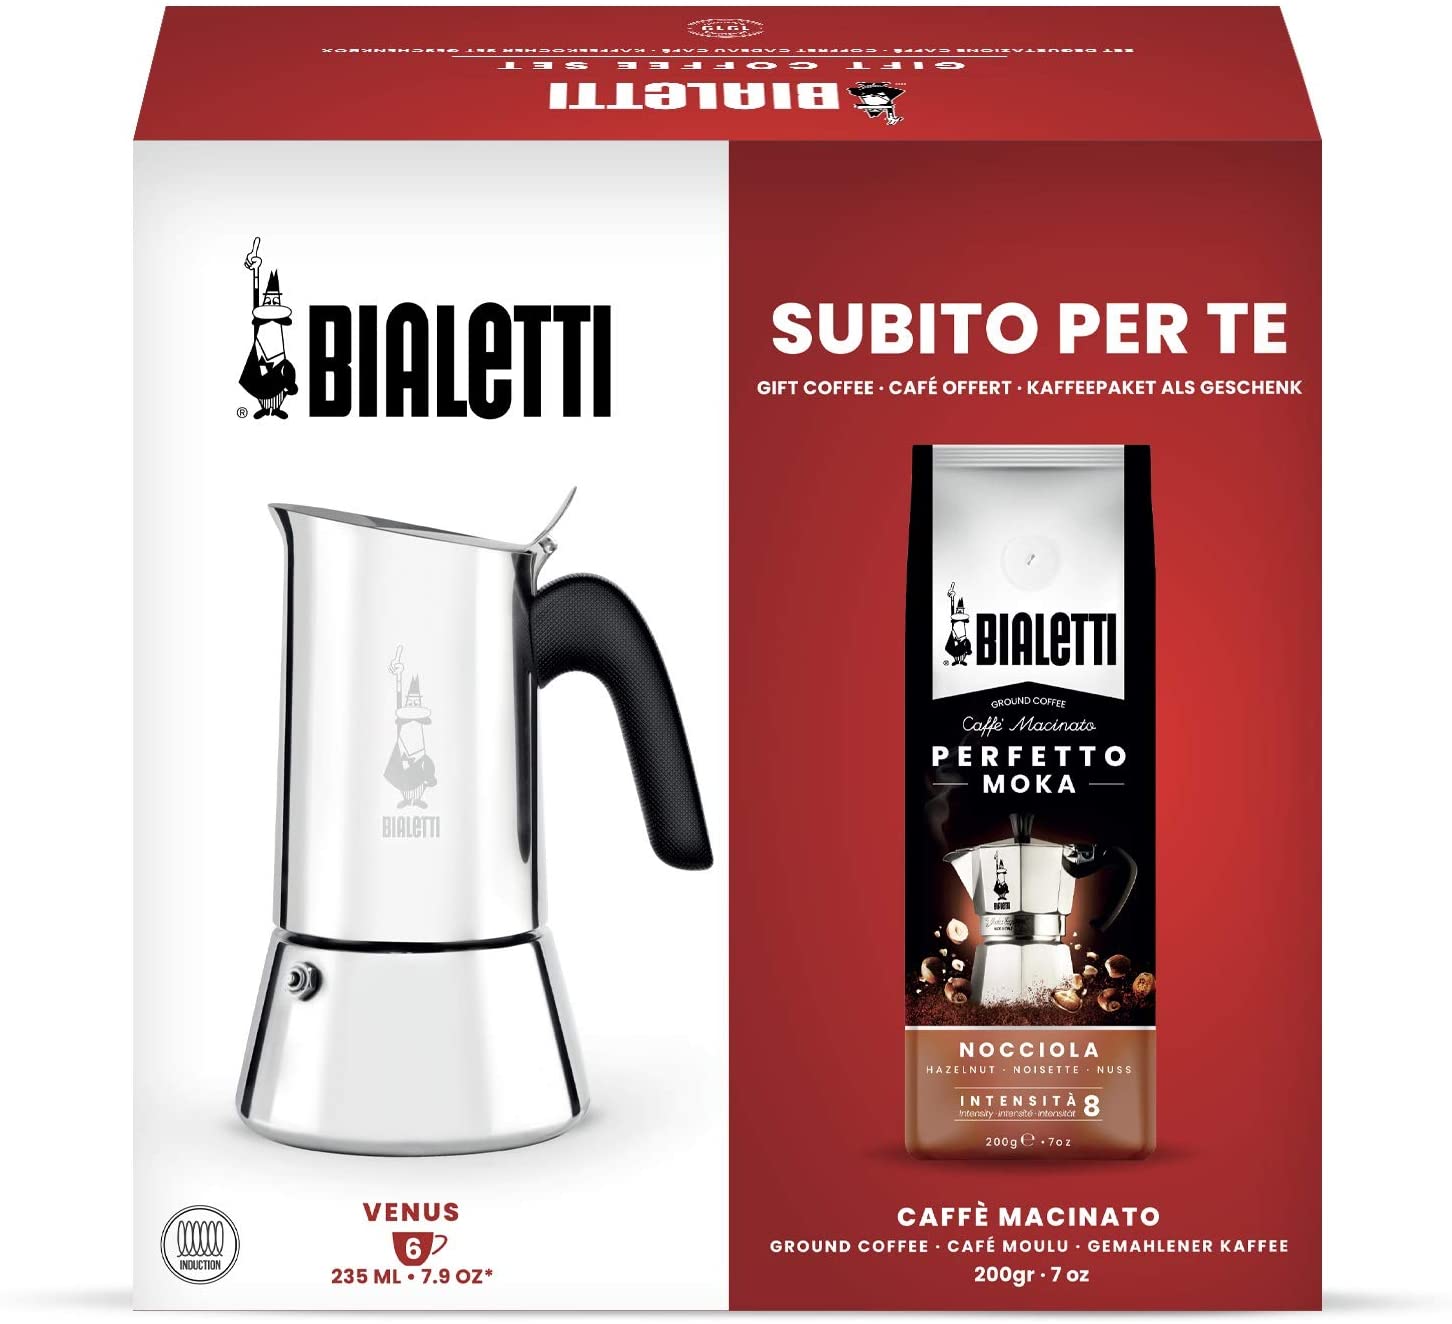 Bialetti Bialett i Venus Stove Jug 6 Cups + 200 g Nocciola Coffee Ground